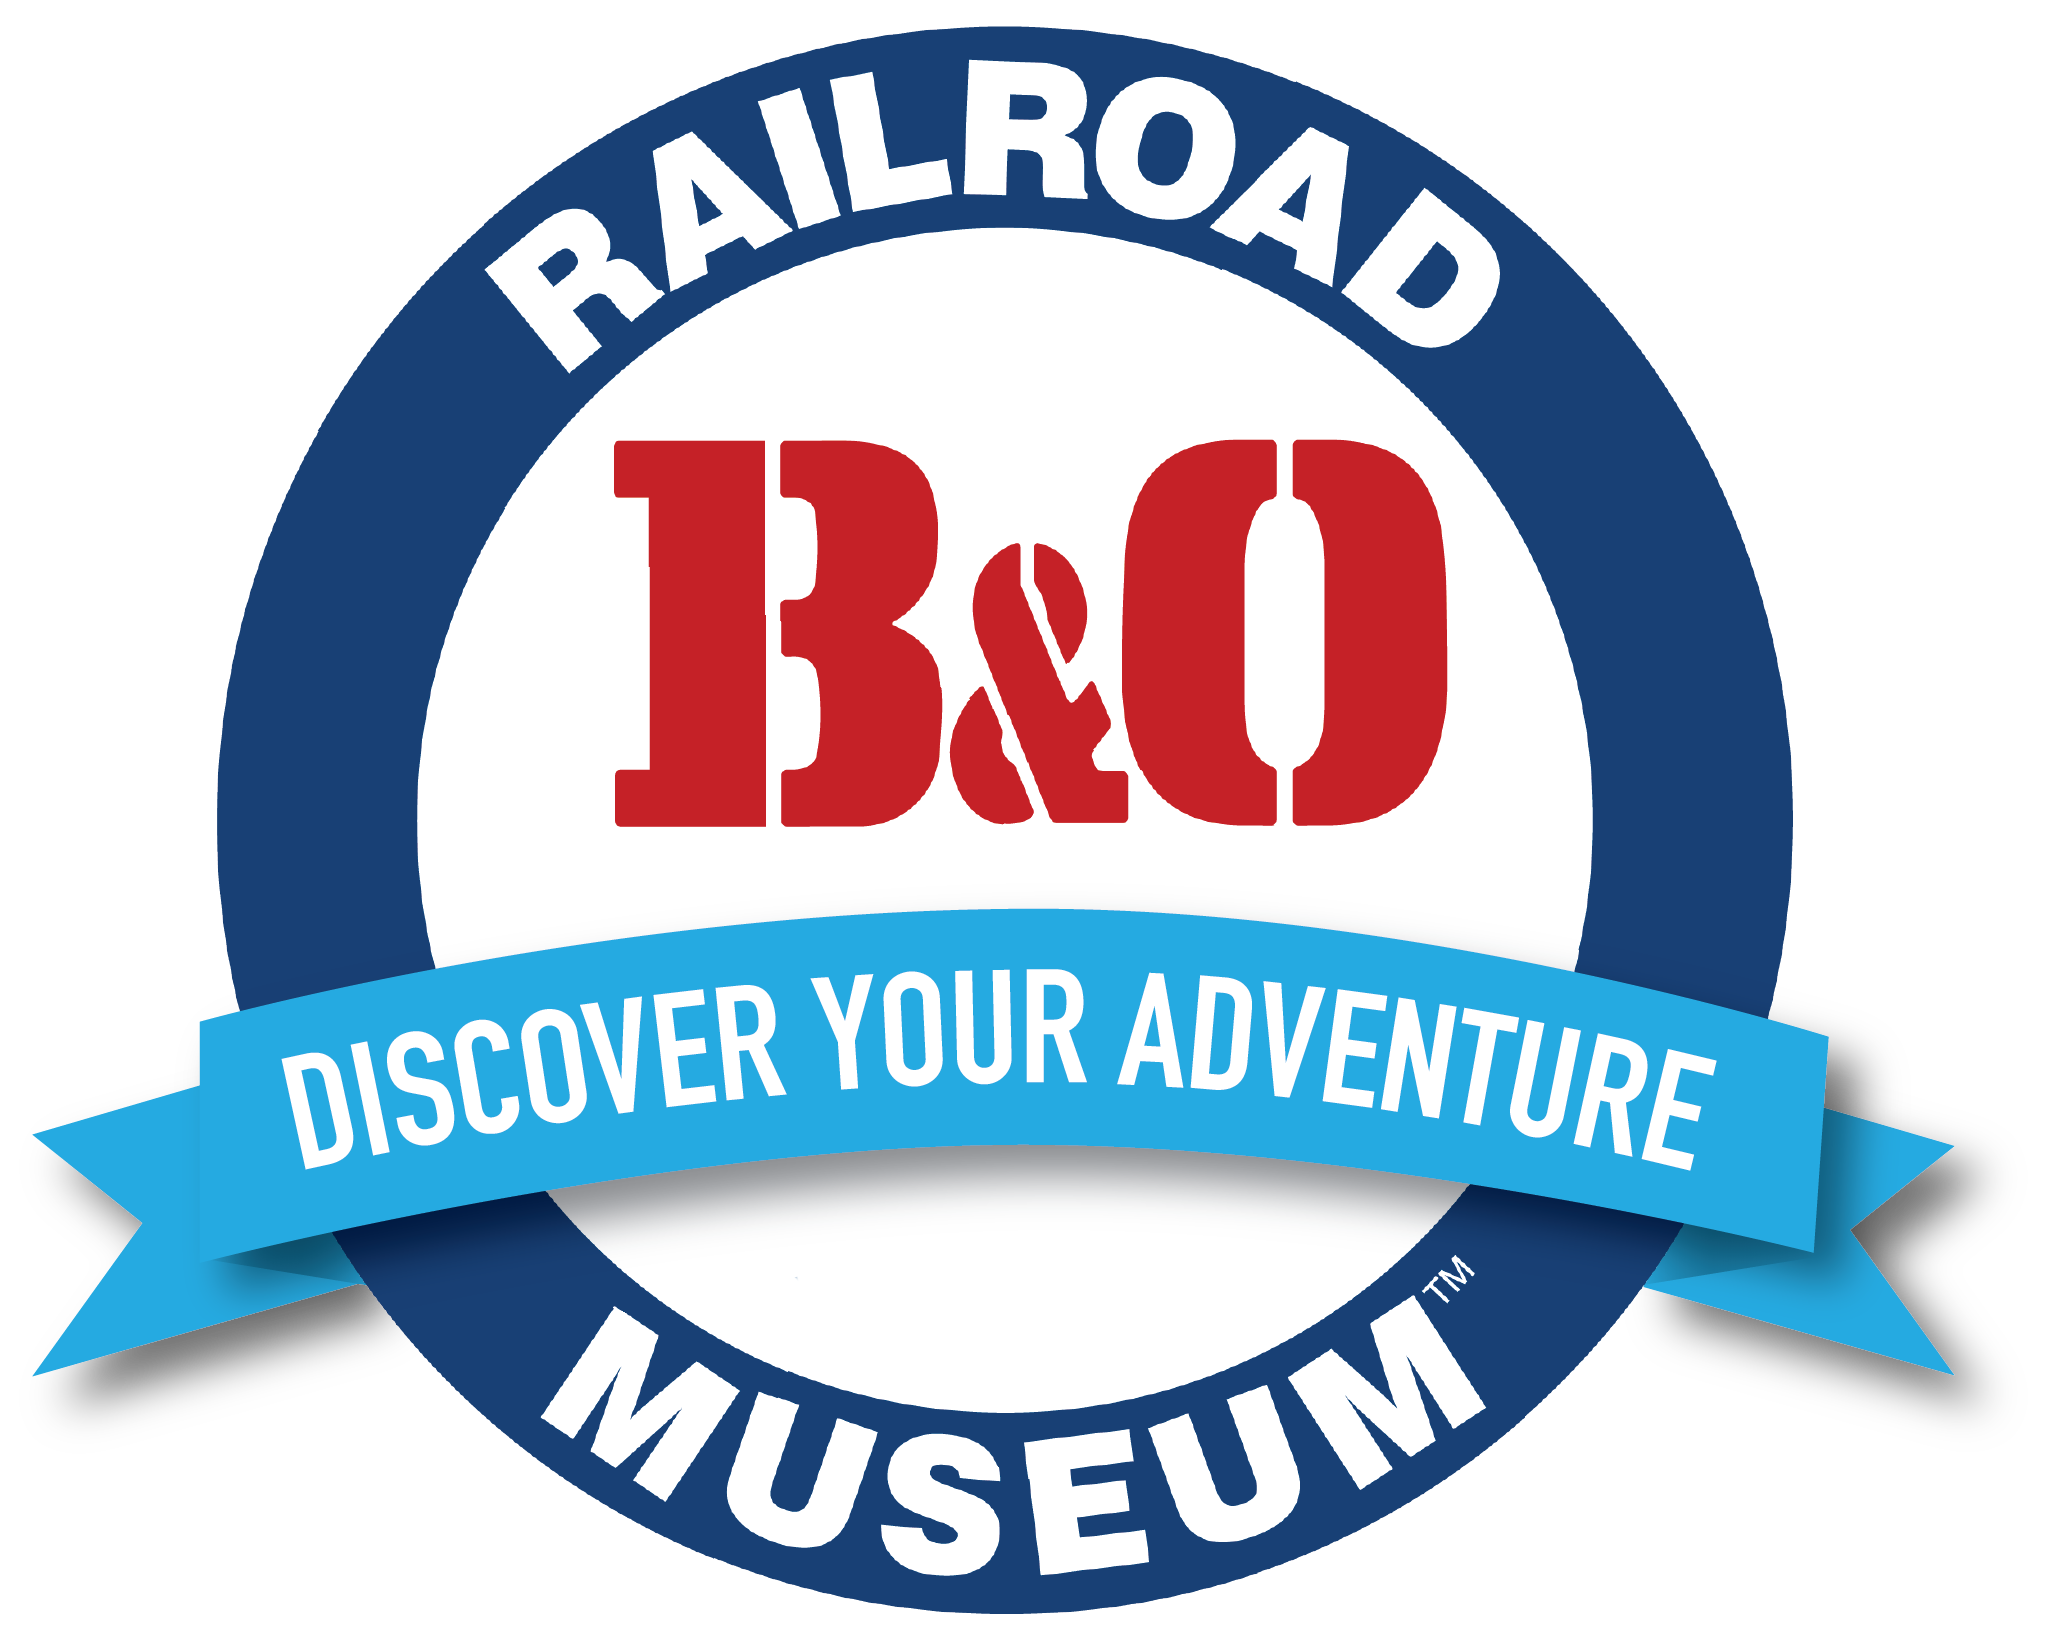 B&O Railroad Museum logo and slogan created by Camera Ready